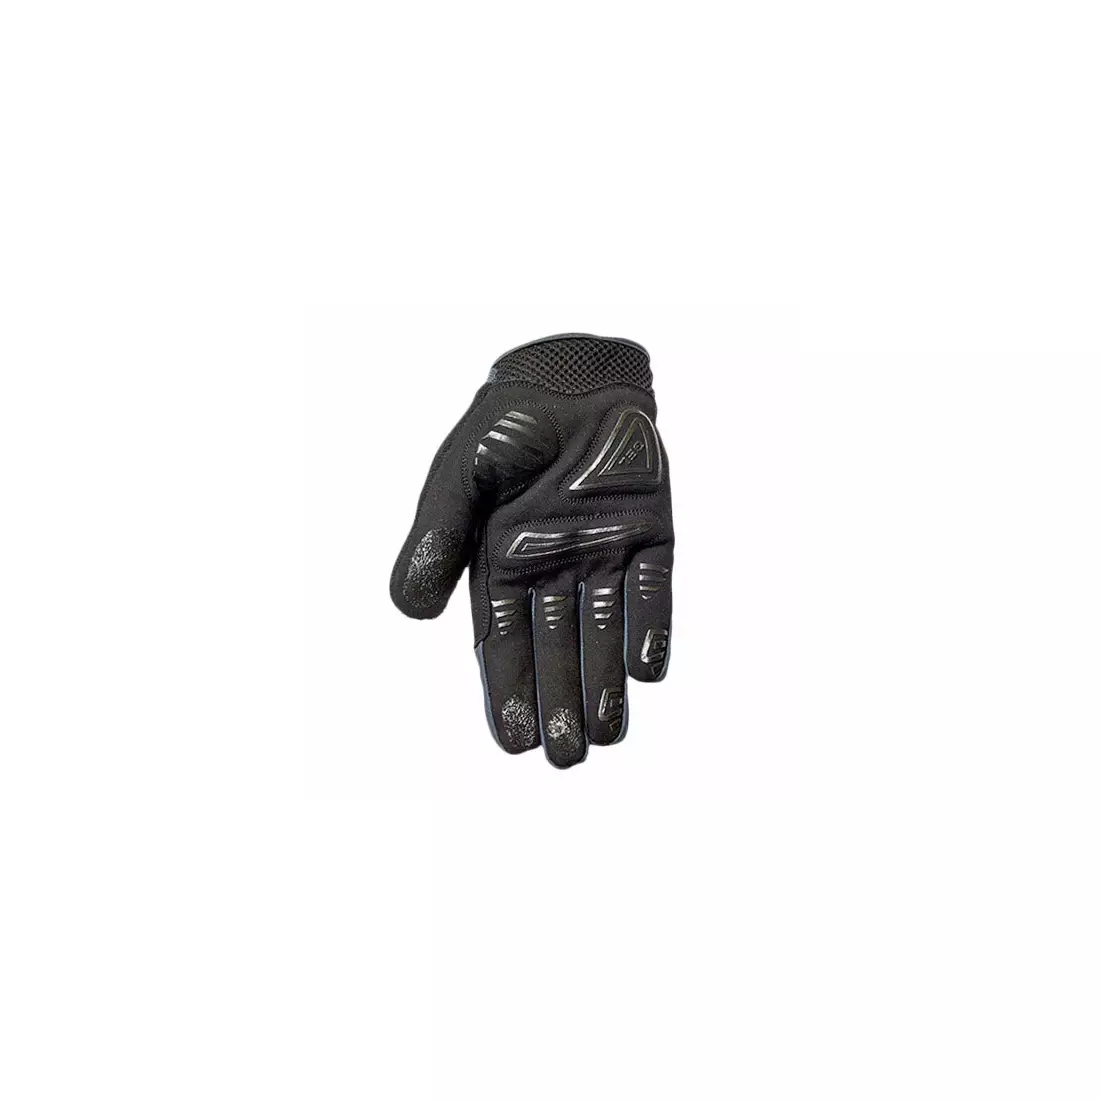 POLEDNIK TRAIL Handschuhe, Farbe: schwarz